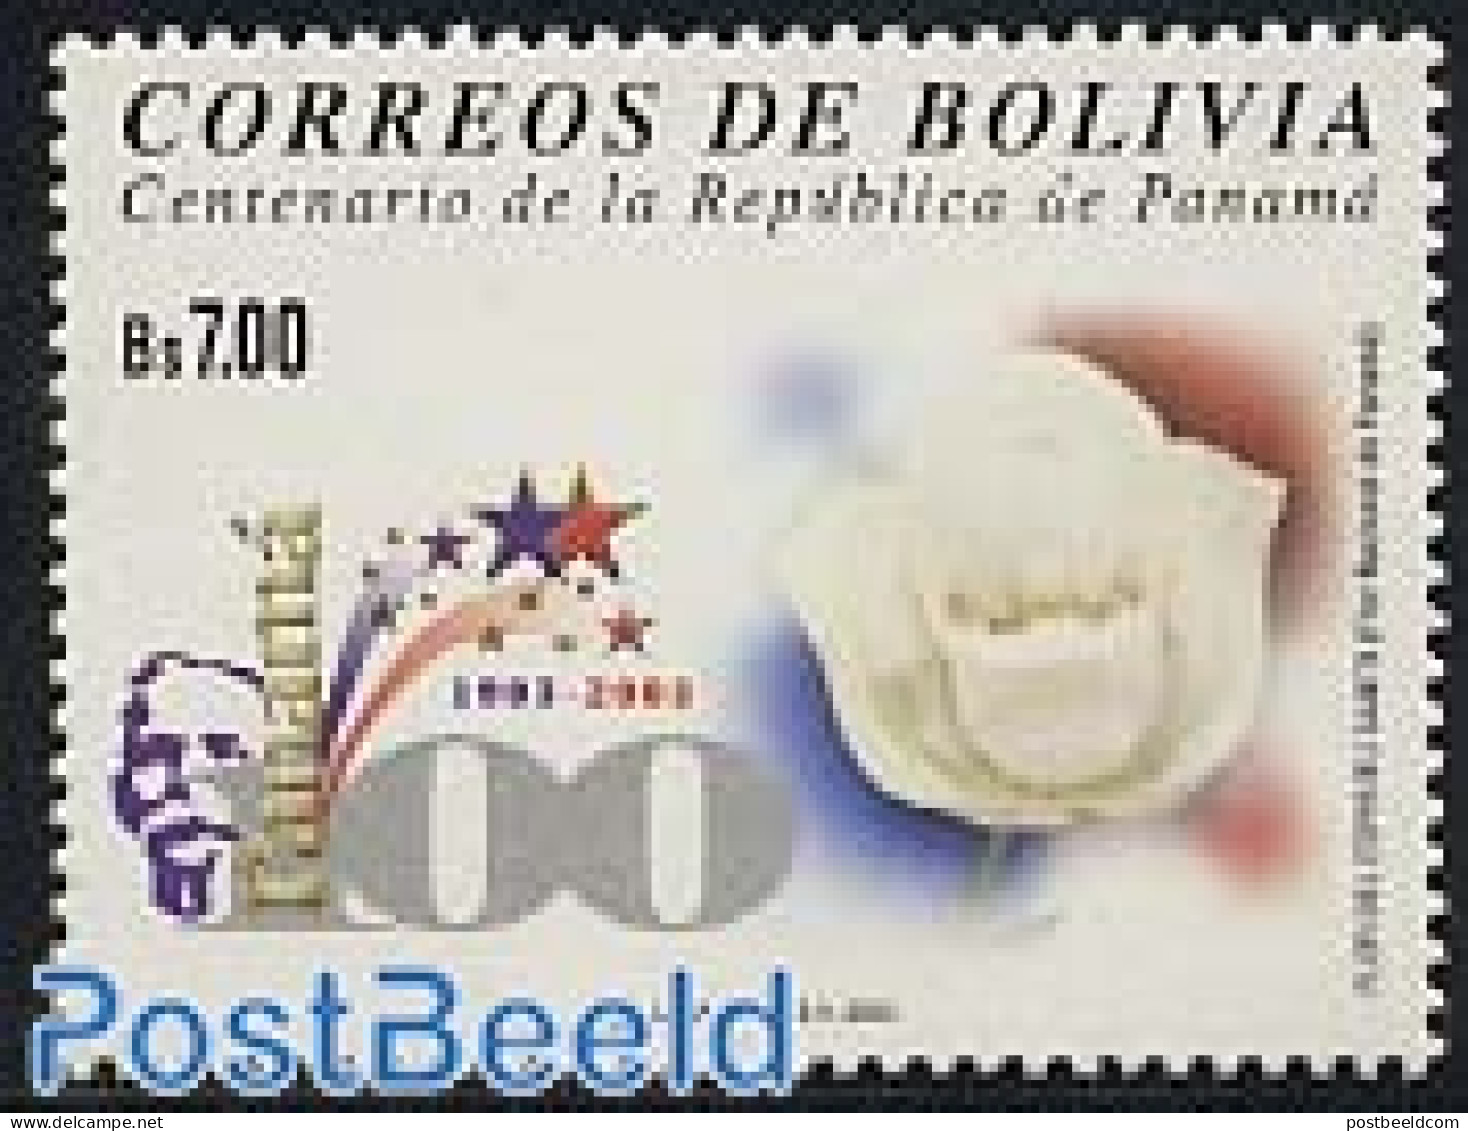 Bolivia 2003 Republic Centenary 1v, Mint NH, Nature - Flowers & Plants - Bolivie